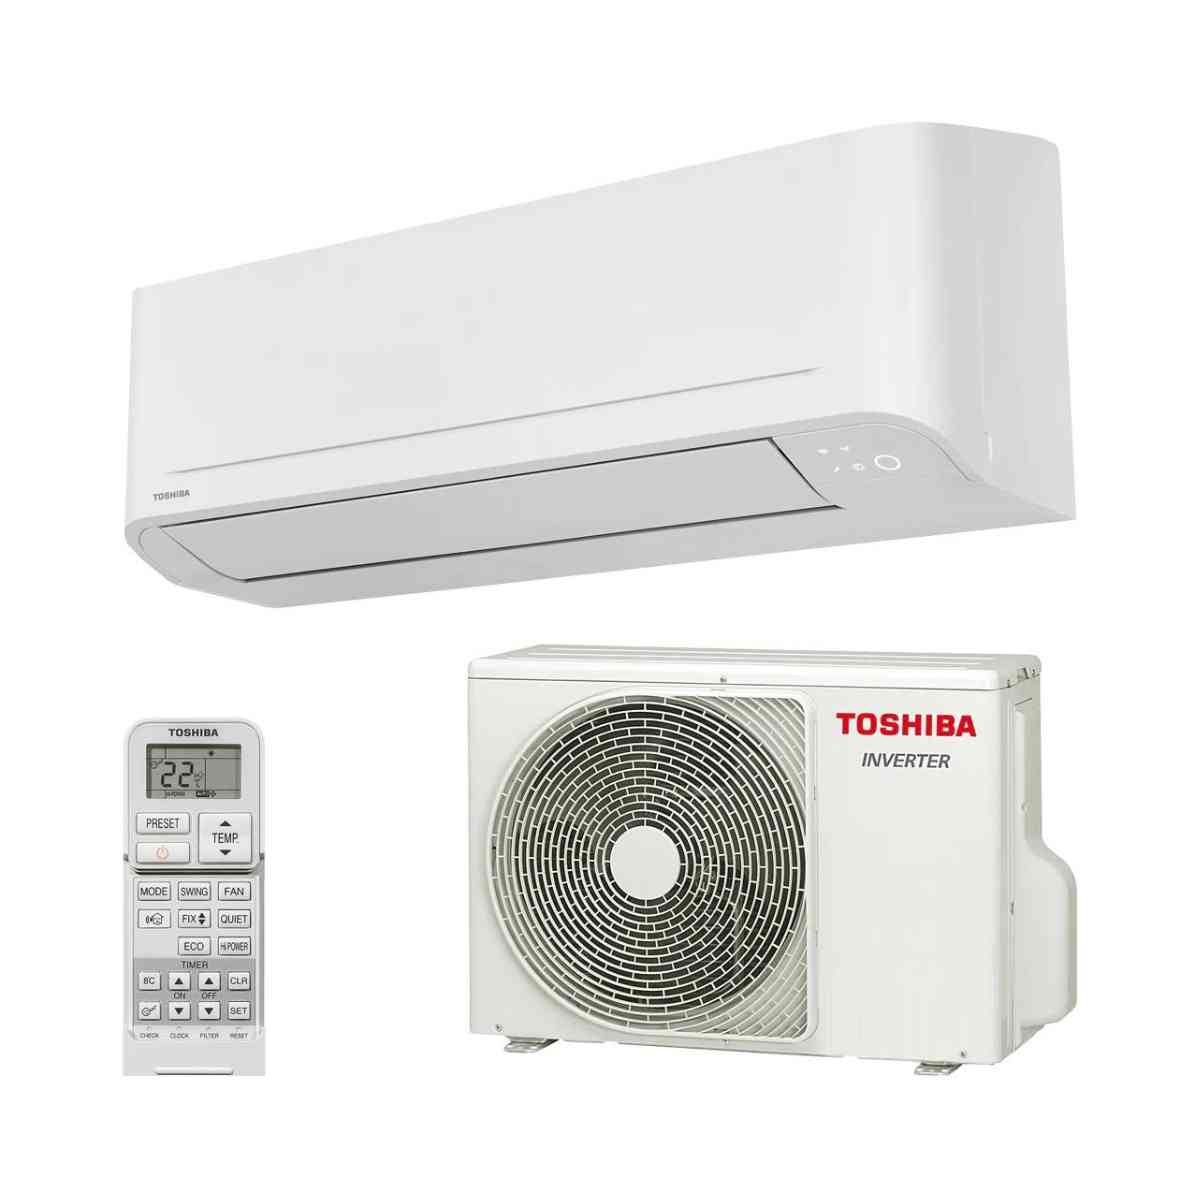 Ar condicionado fixo 1x1 Toshiba Seiya+ 10 8525 BTU com referência SEIYA+ 10 da marca TOSHIBA